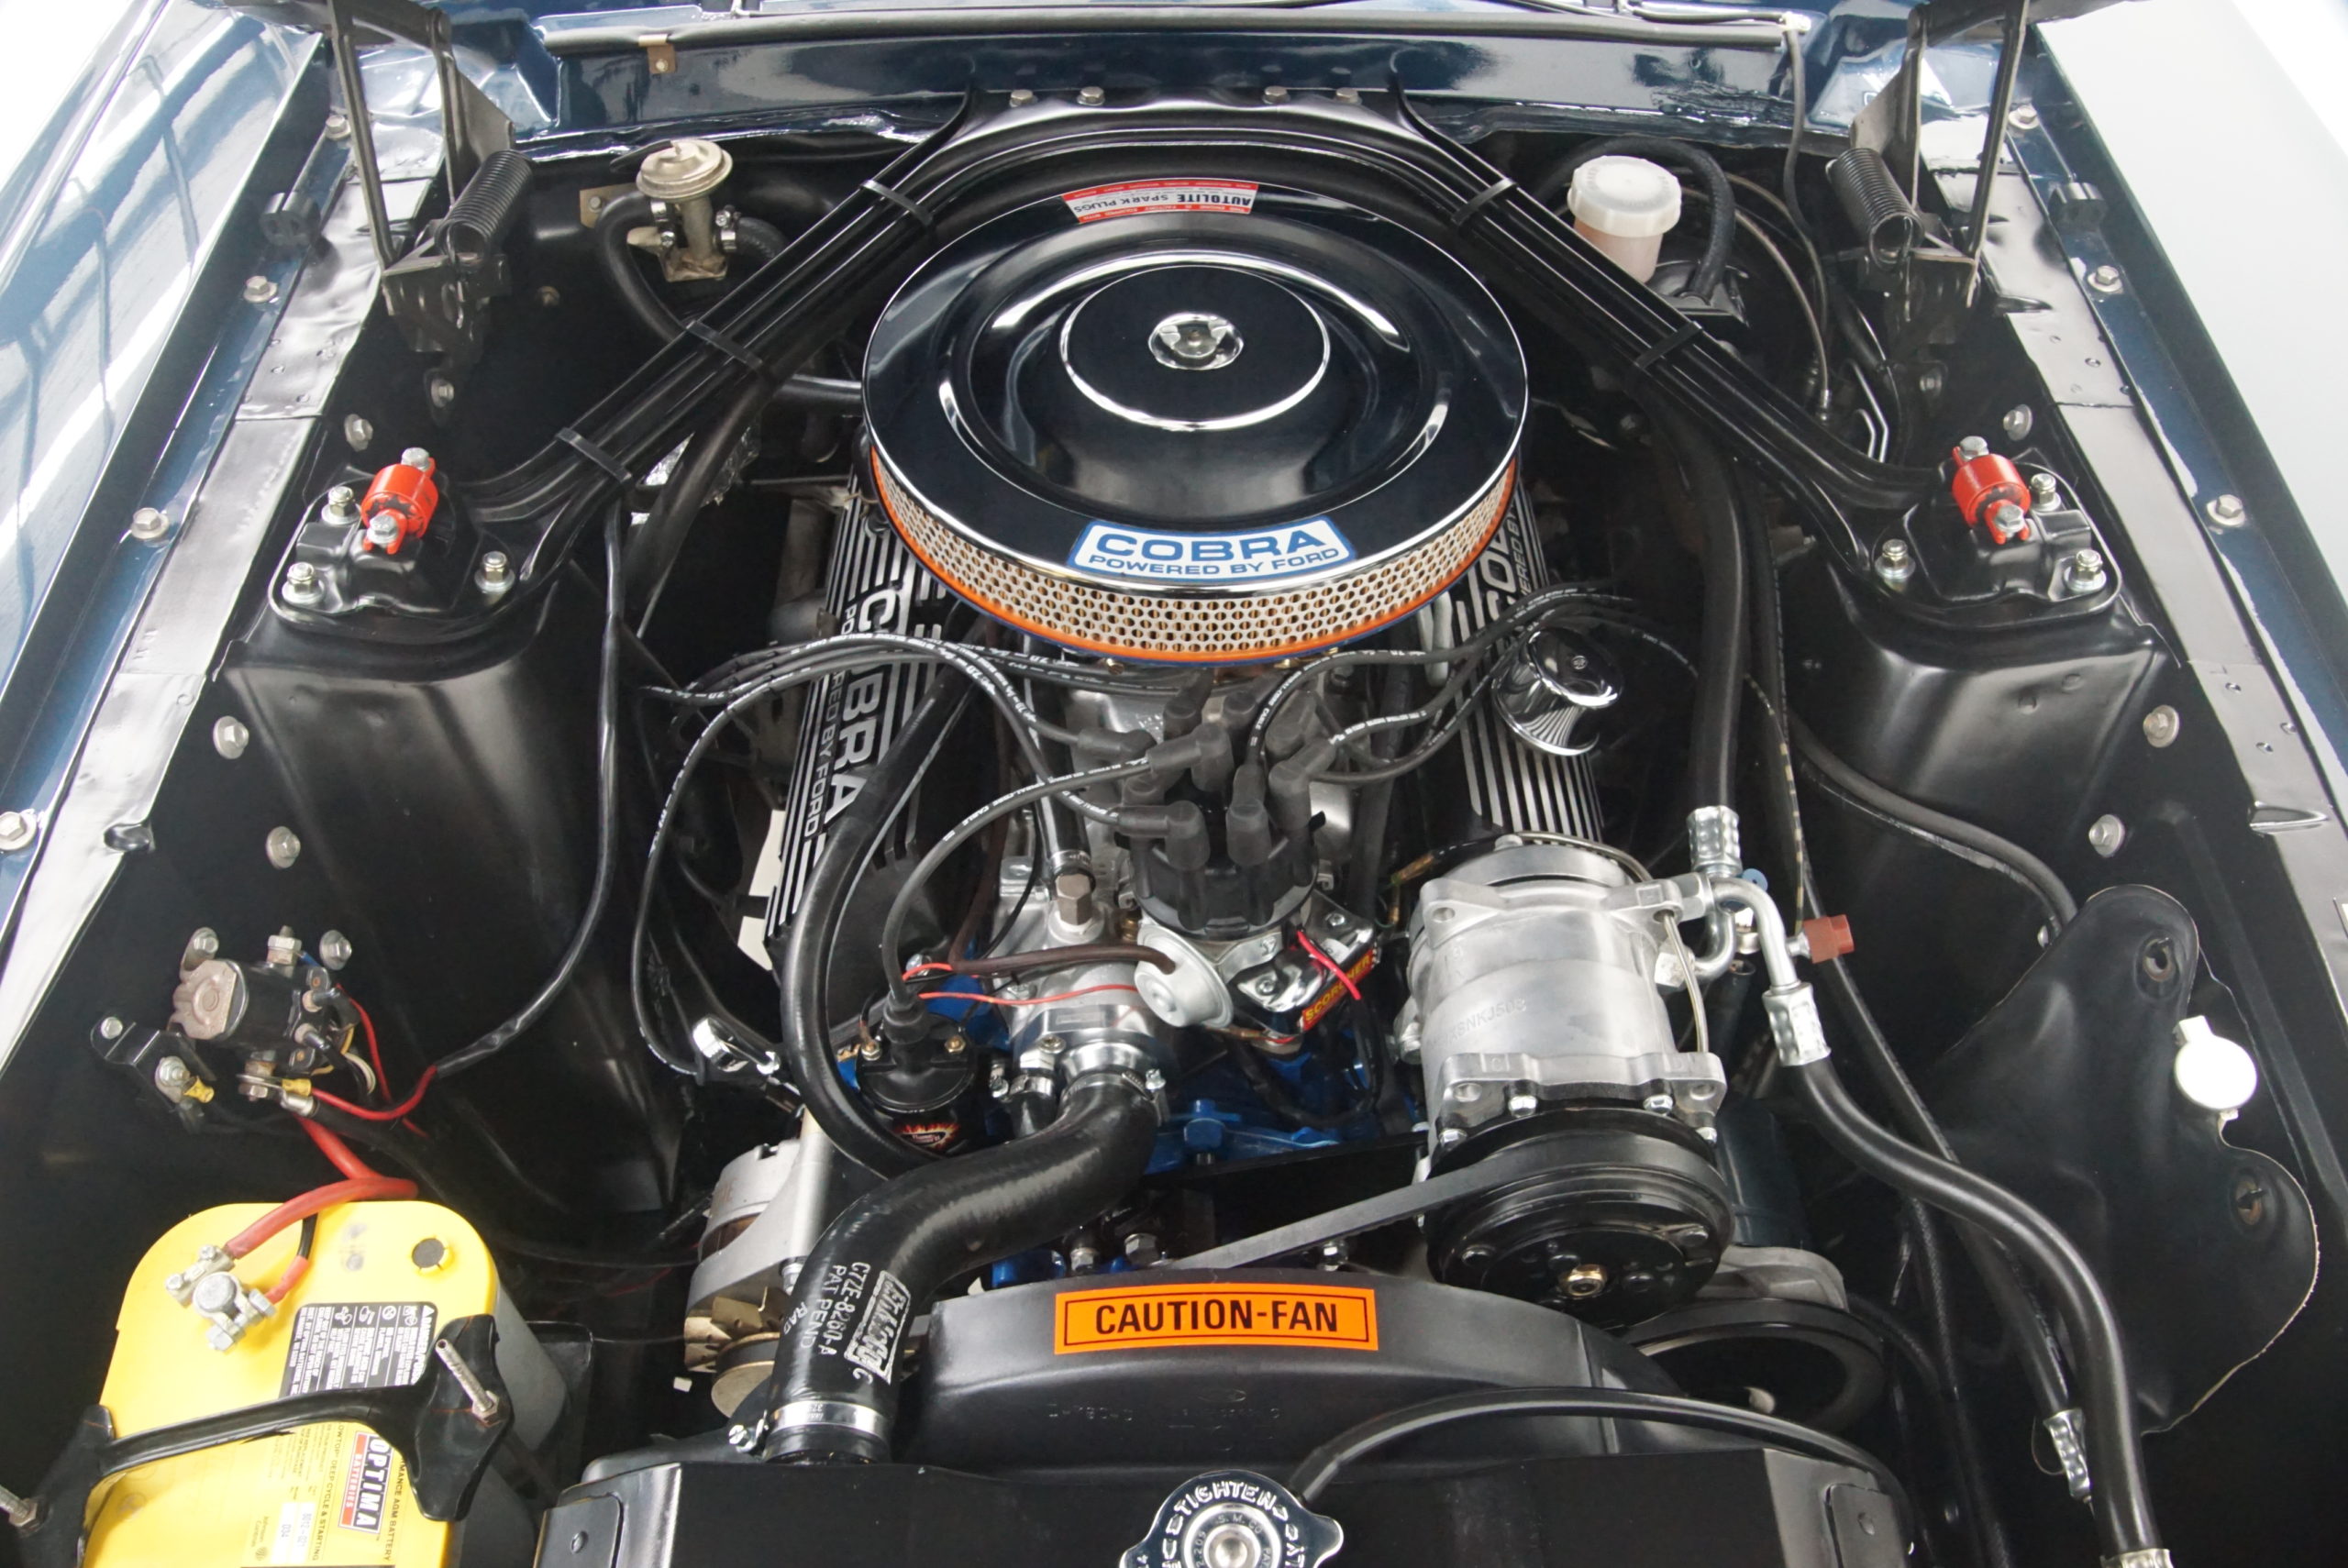 1967 Shelby Mustang GT350 Fastback moteur vue de face - Shannons Auctions avril 2021.